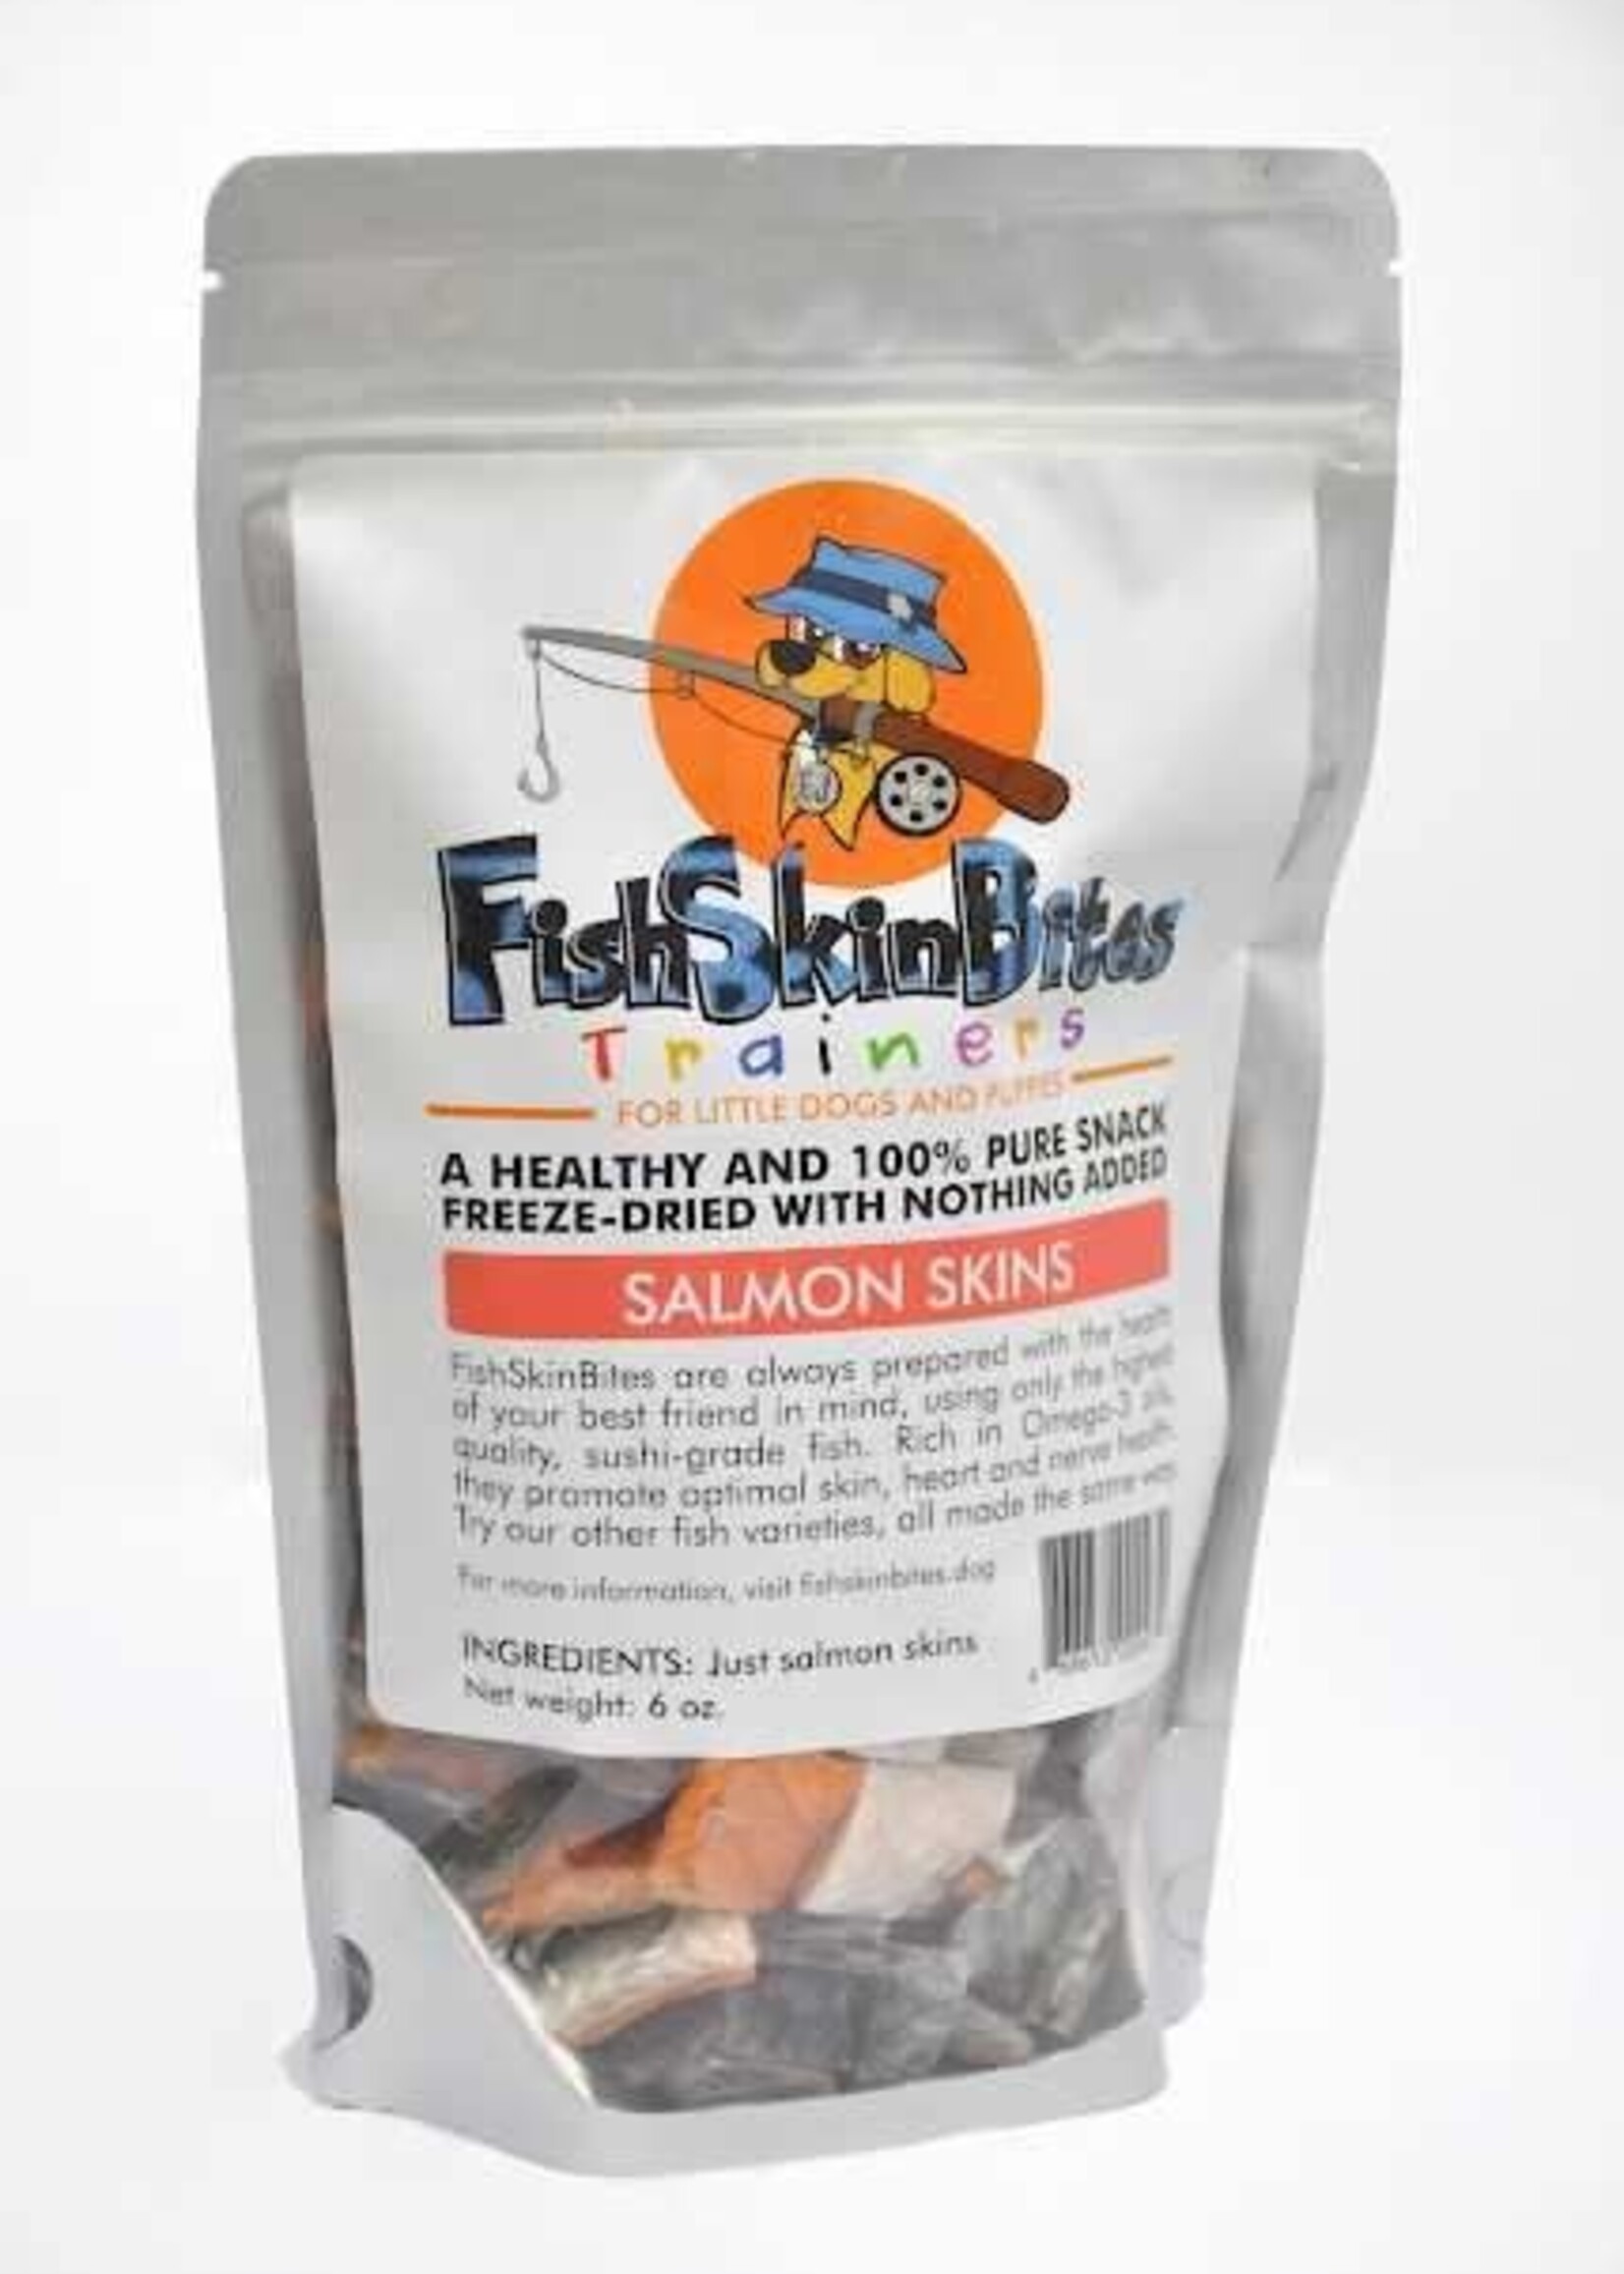 FishSkinBites FishSkinBites Trainers Salmon Skins Freeze-Dried Dog Treats 6-oz